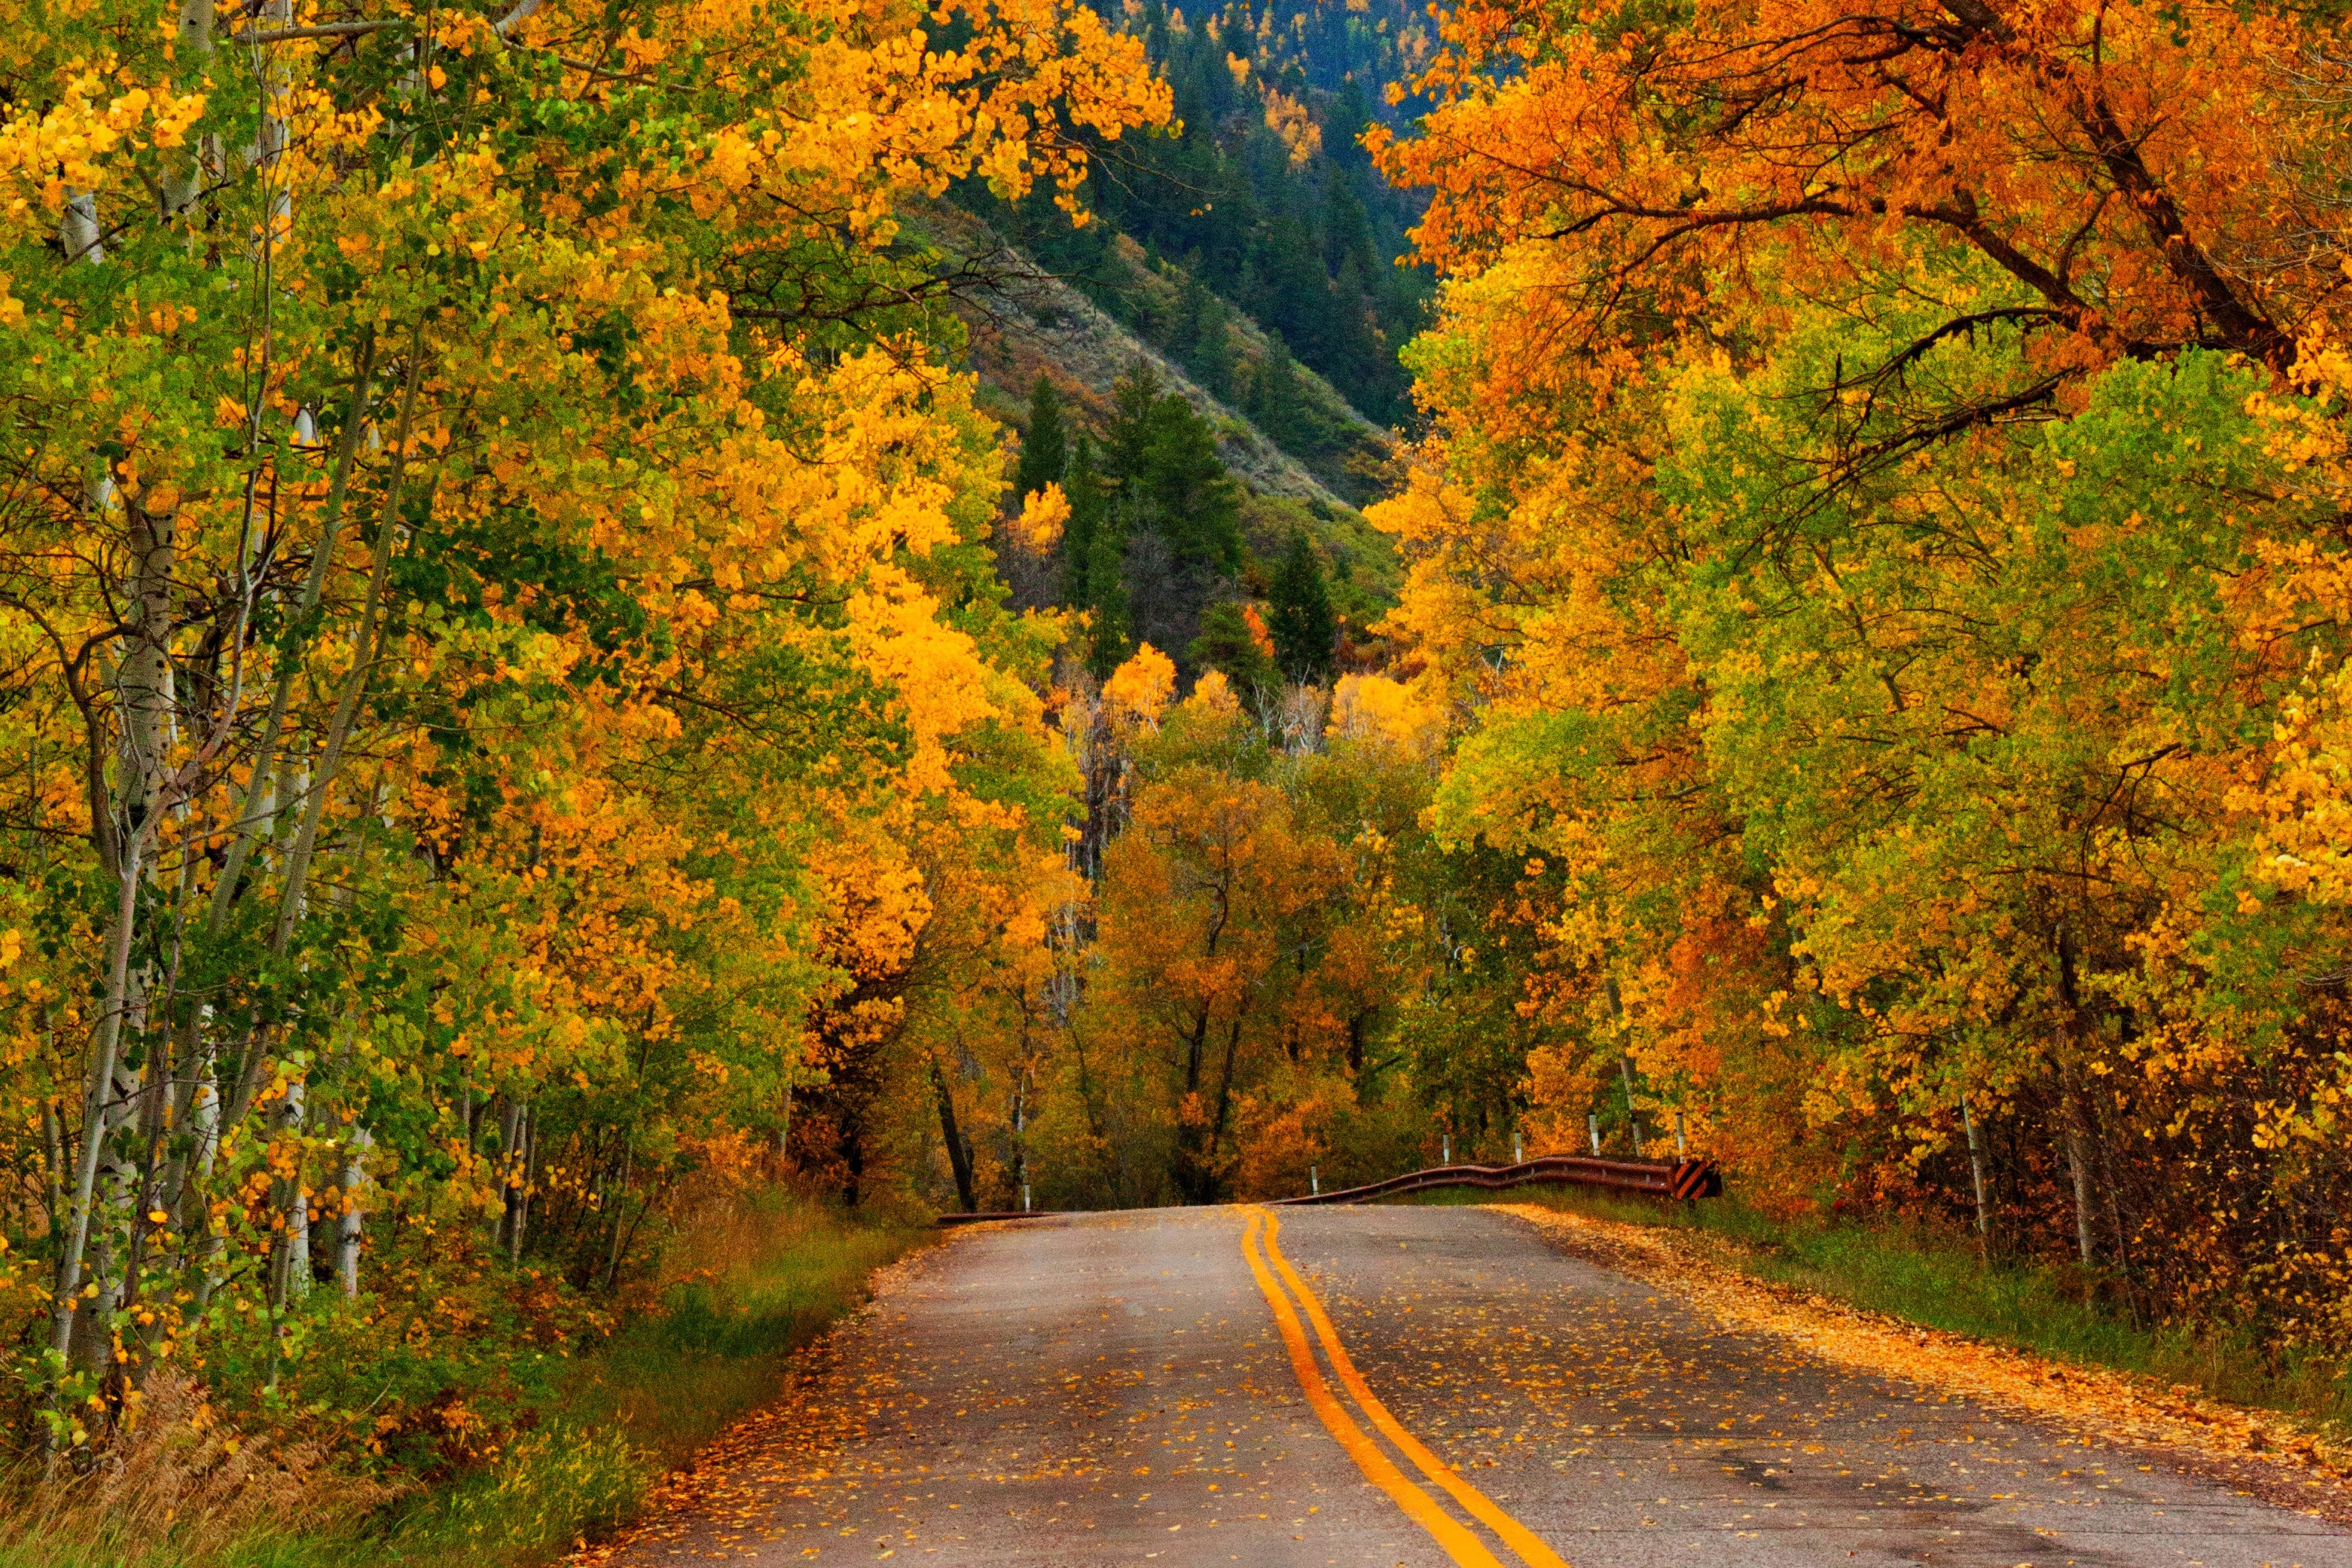 Осень. Природа осень. Дорога в осень. Осенняя дорога в лесу. Осень лес дорога.